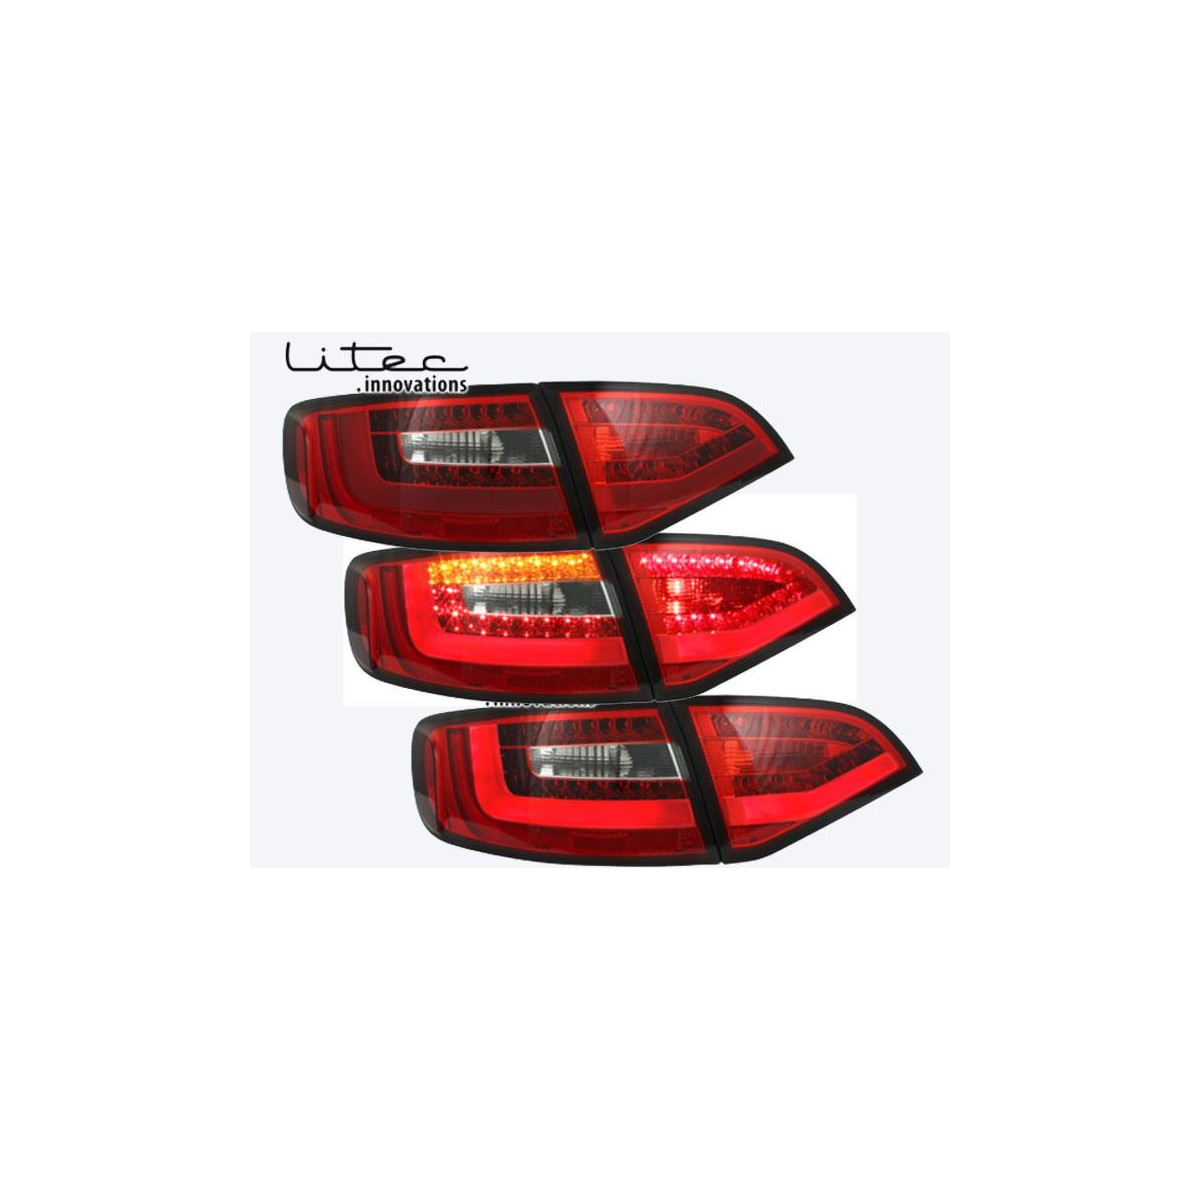 LAMPY TYLNE LED LITEC AUDI A4 B8 8K AVANT RED/WHIT